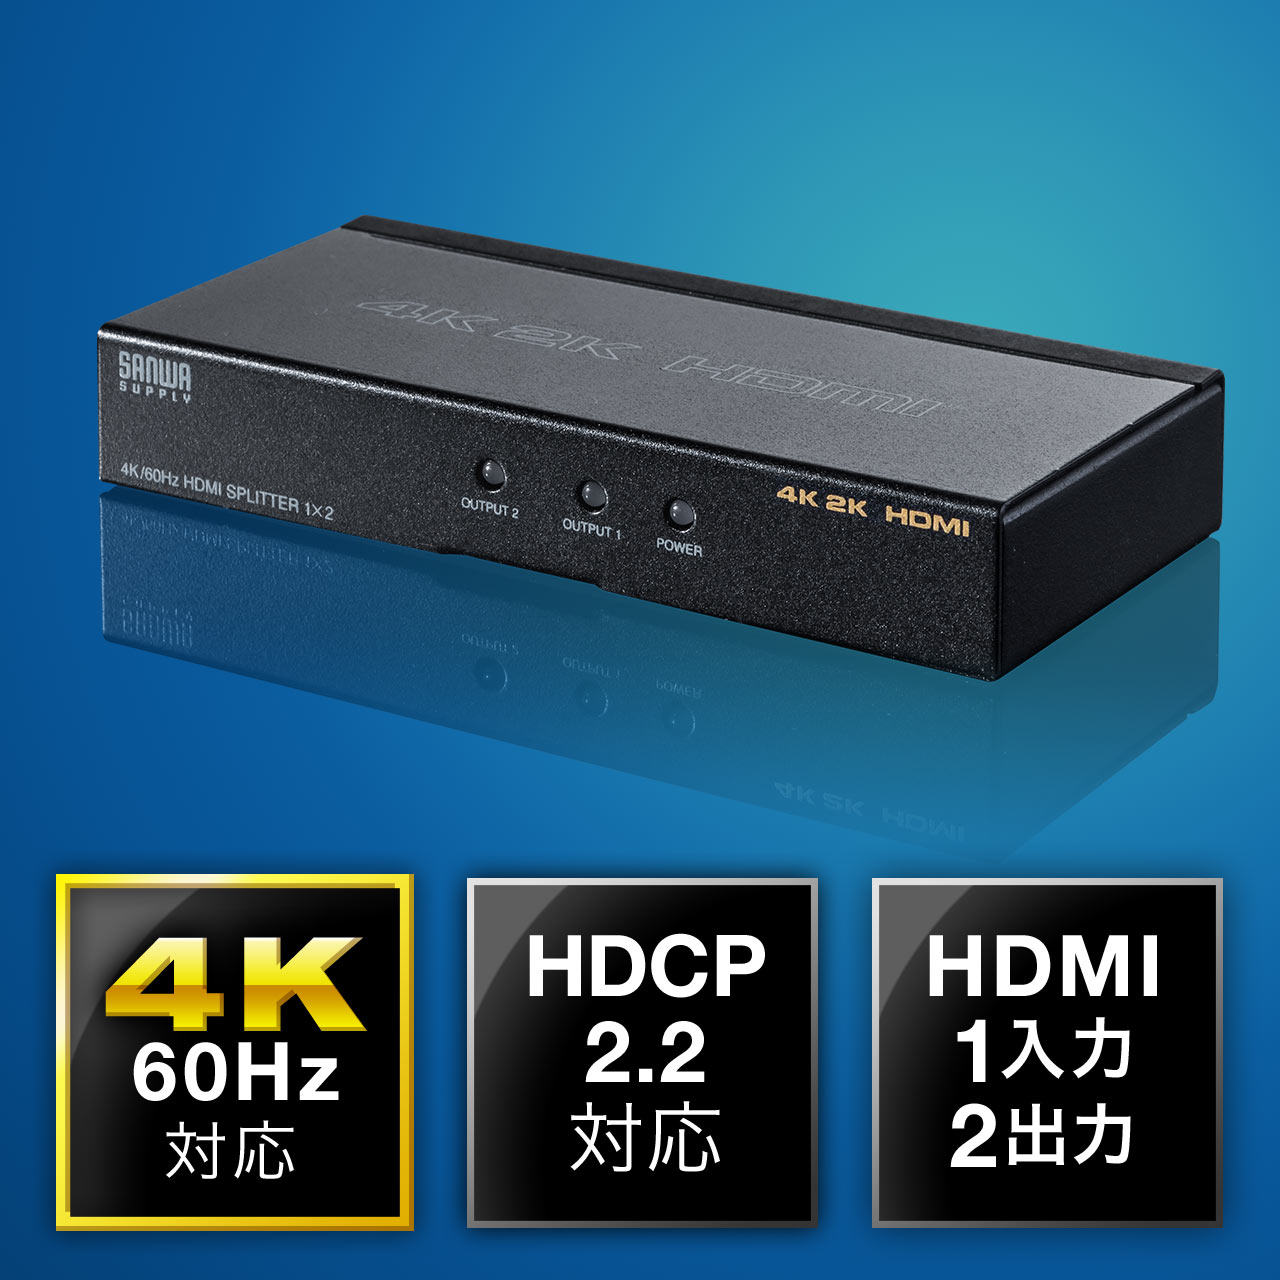 HDMI分配器 1入力 2出力 4K/60Hz対応 HDR非対応 HDMIスプリッター｜サンプル無料貸出対応 400-VGA013 |サンワダイレクト